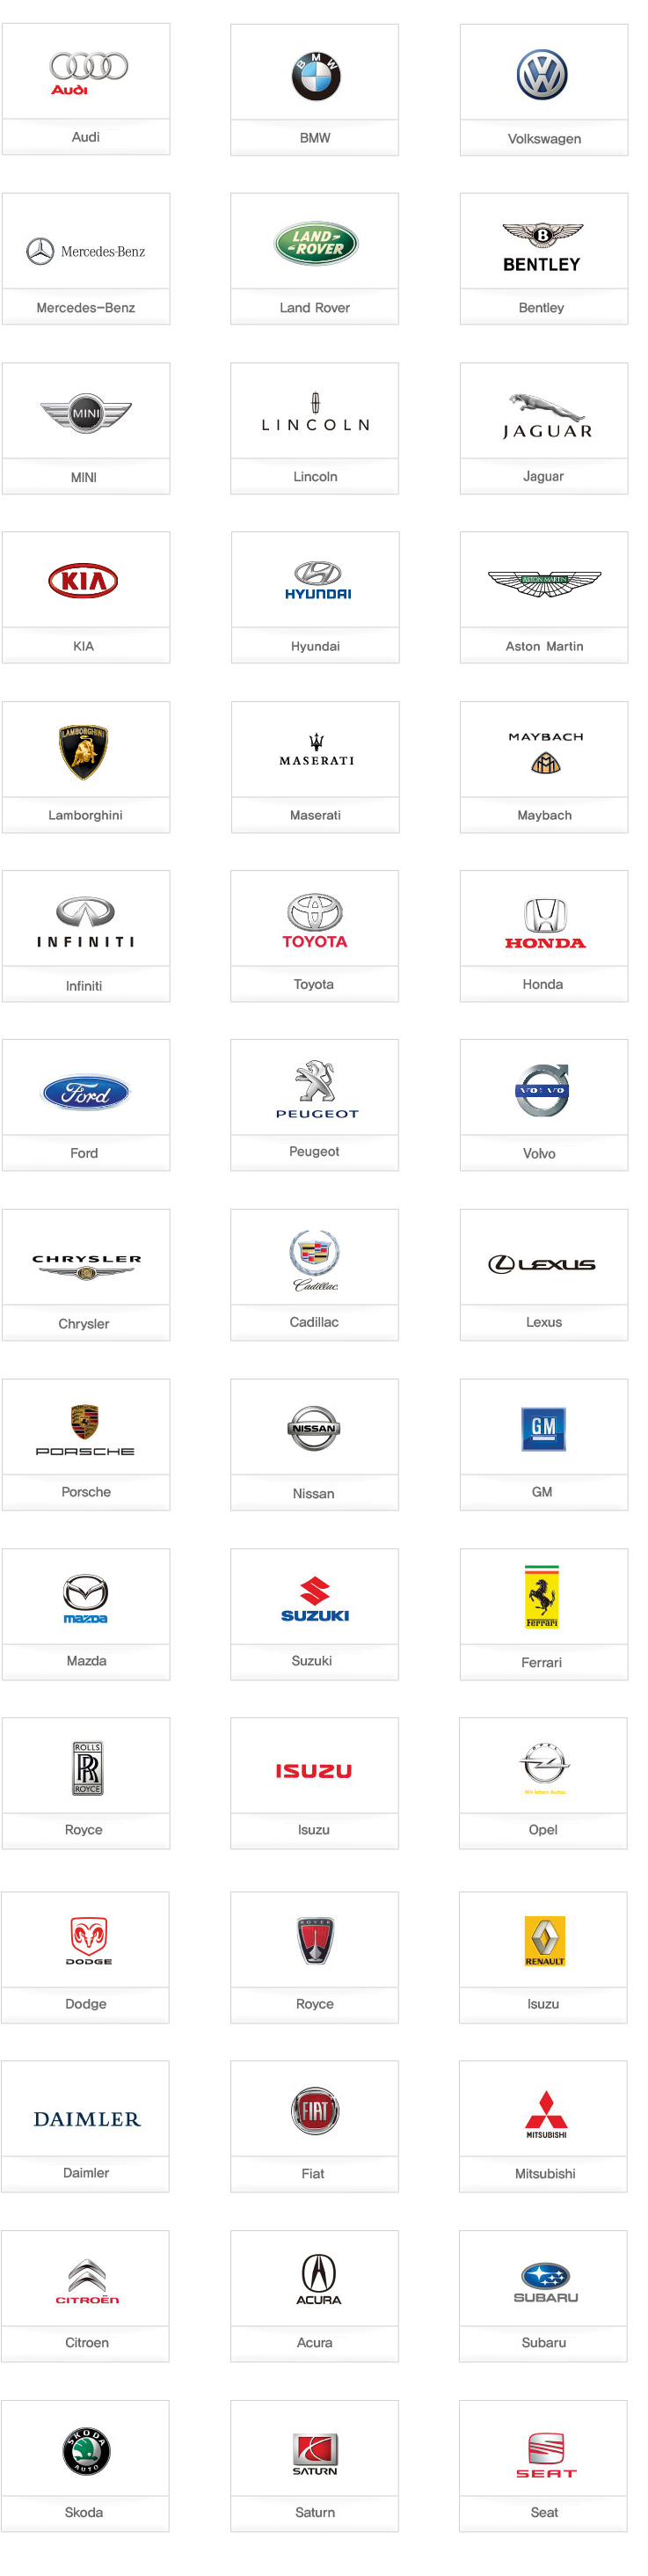 Hunter Partners - Automobile Manufacturers